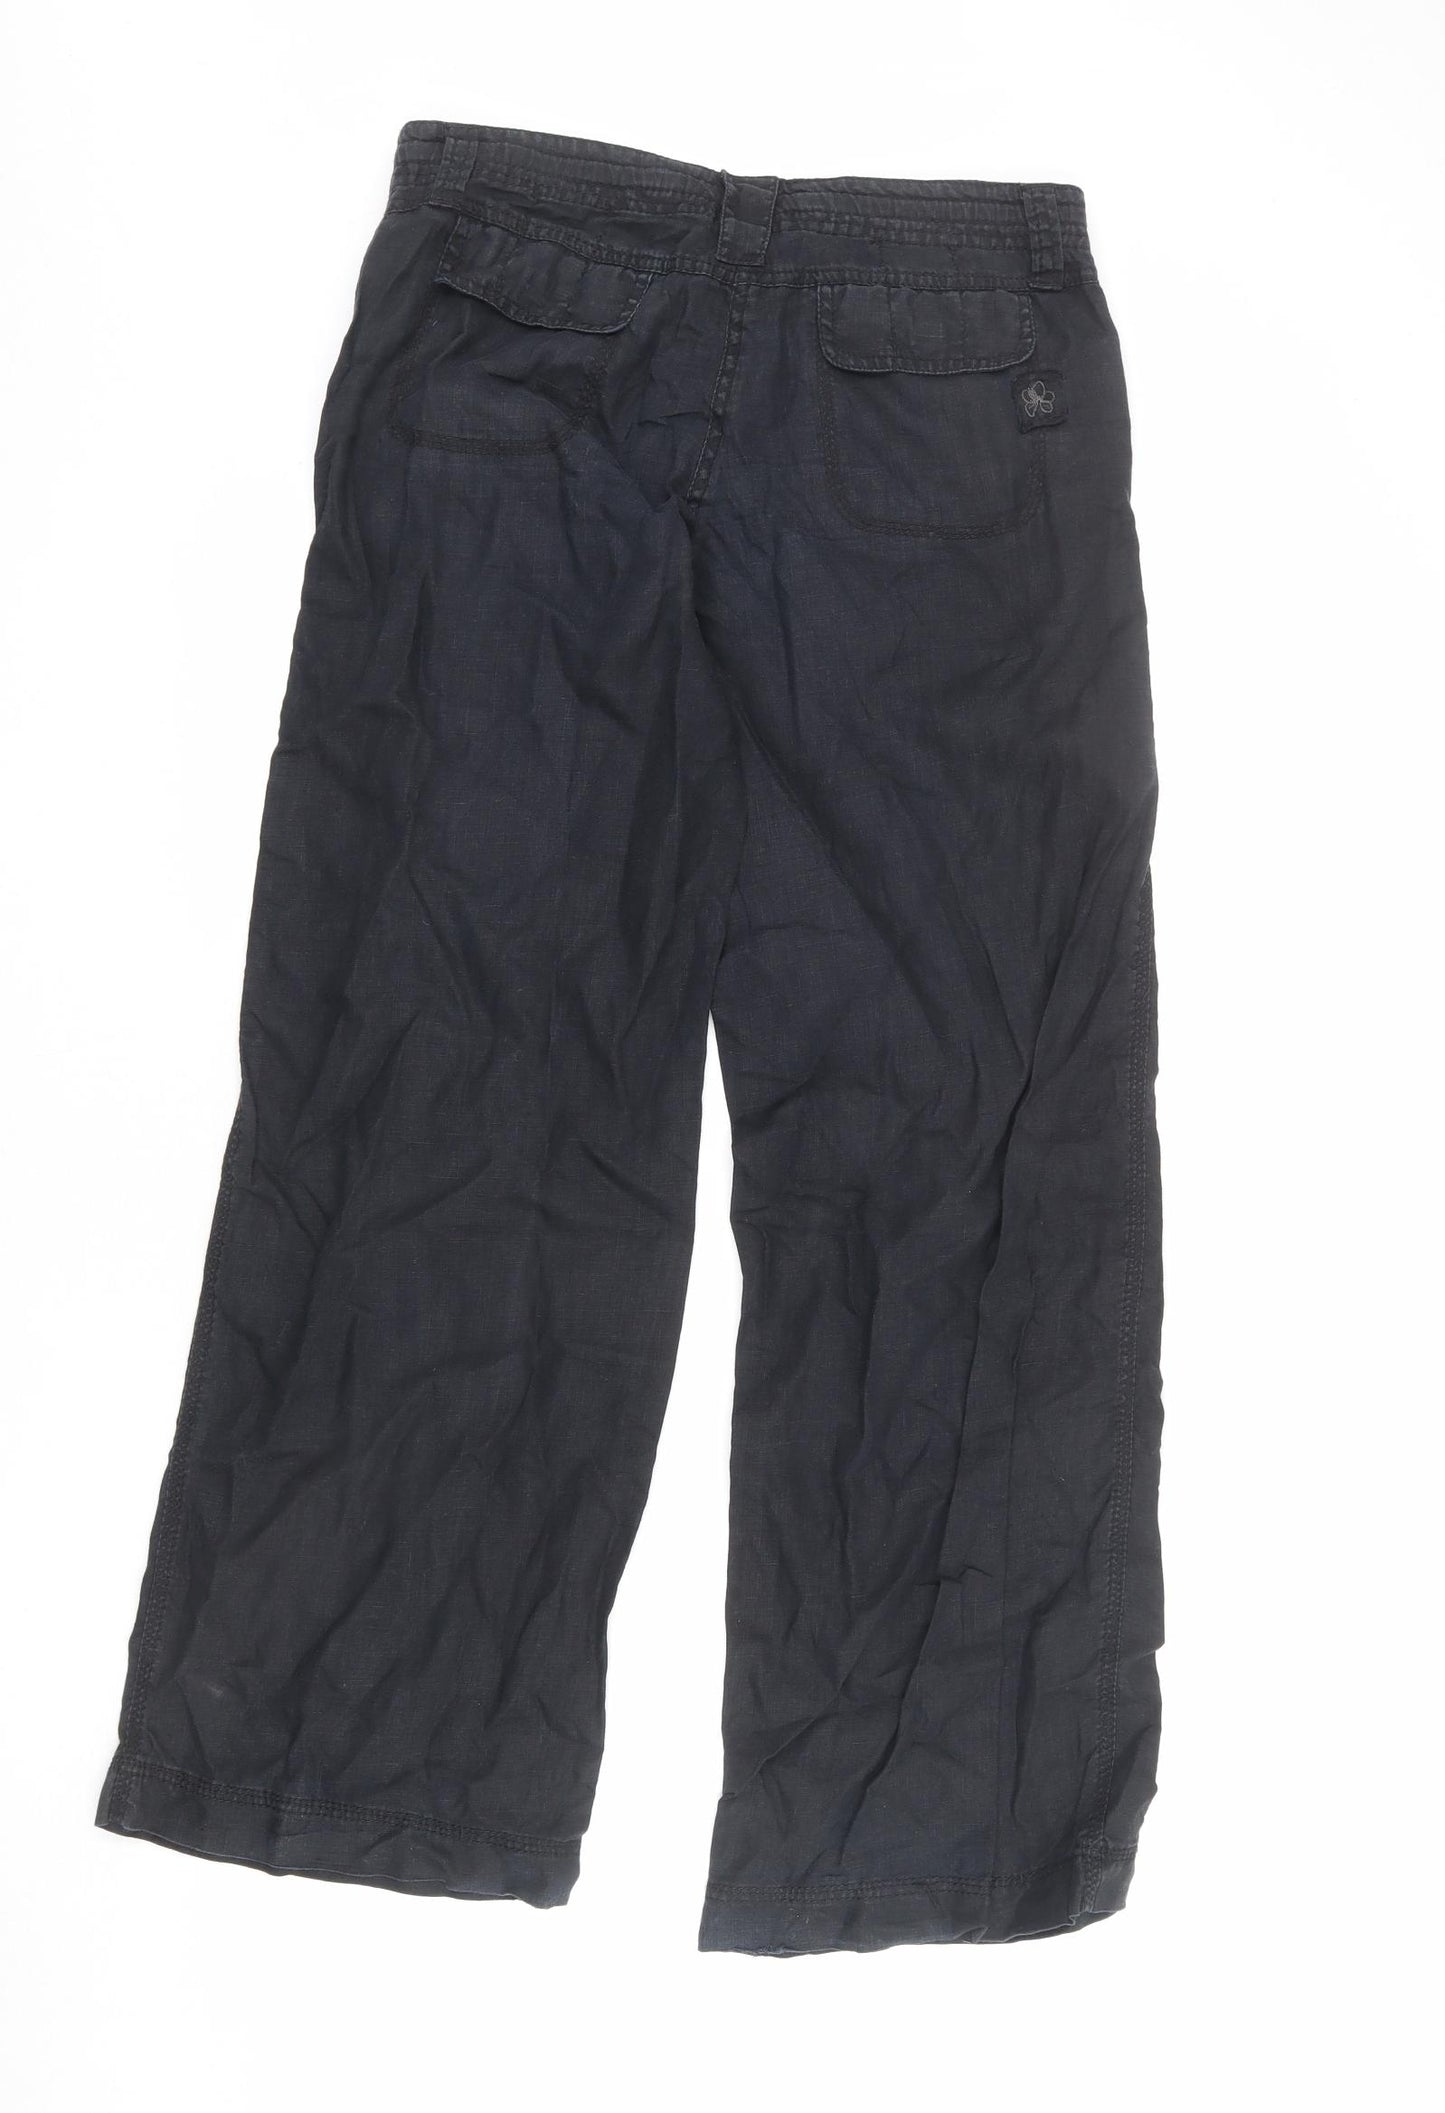 River Island Womens Black Linen Trousers Size 10 L30 in Regular Zip